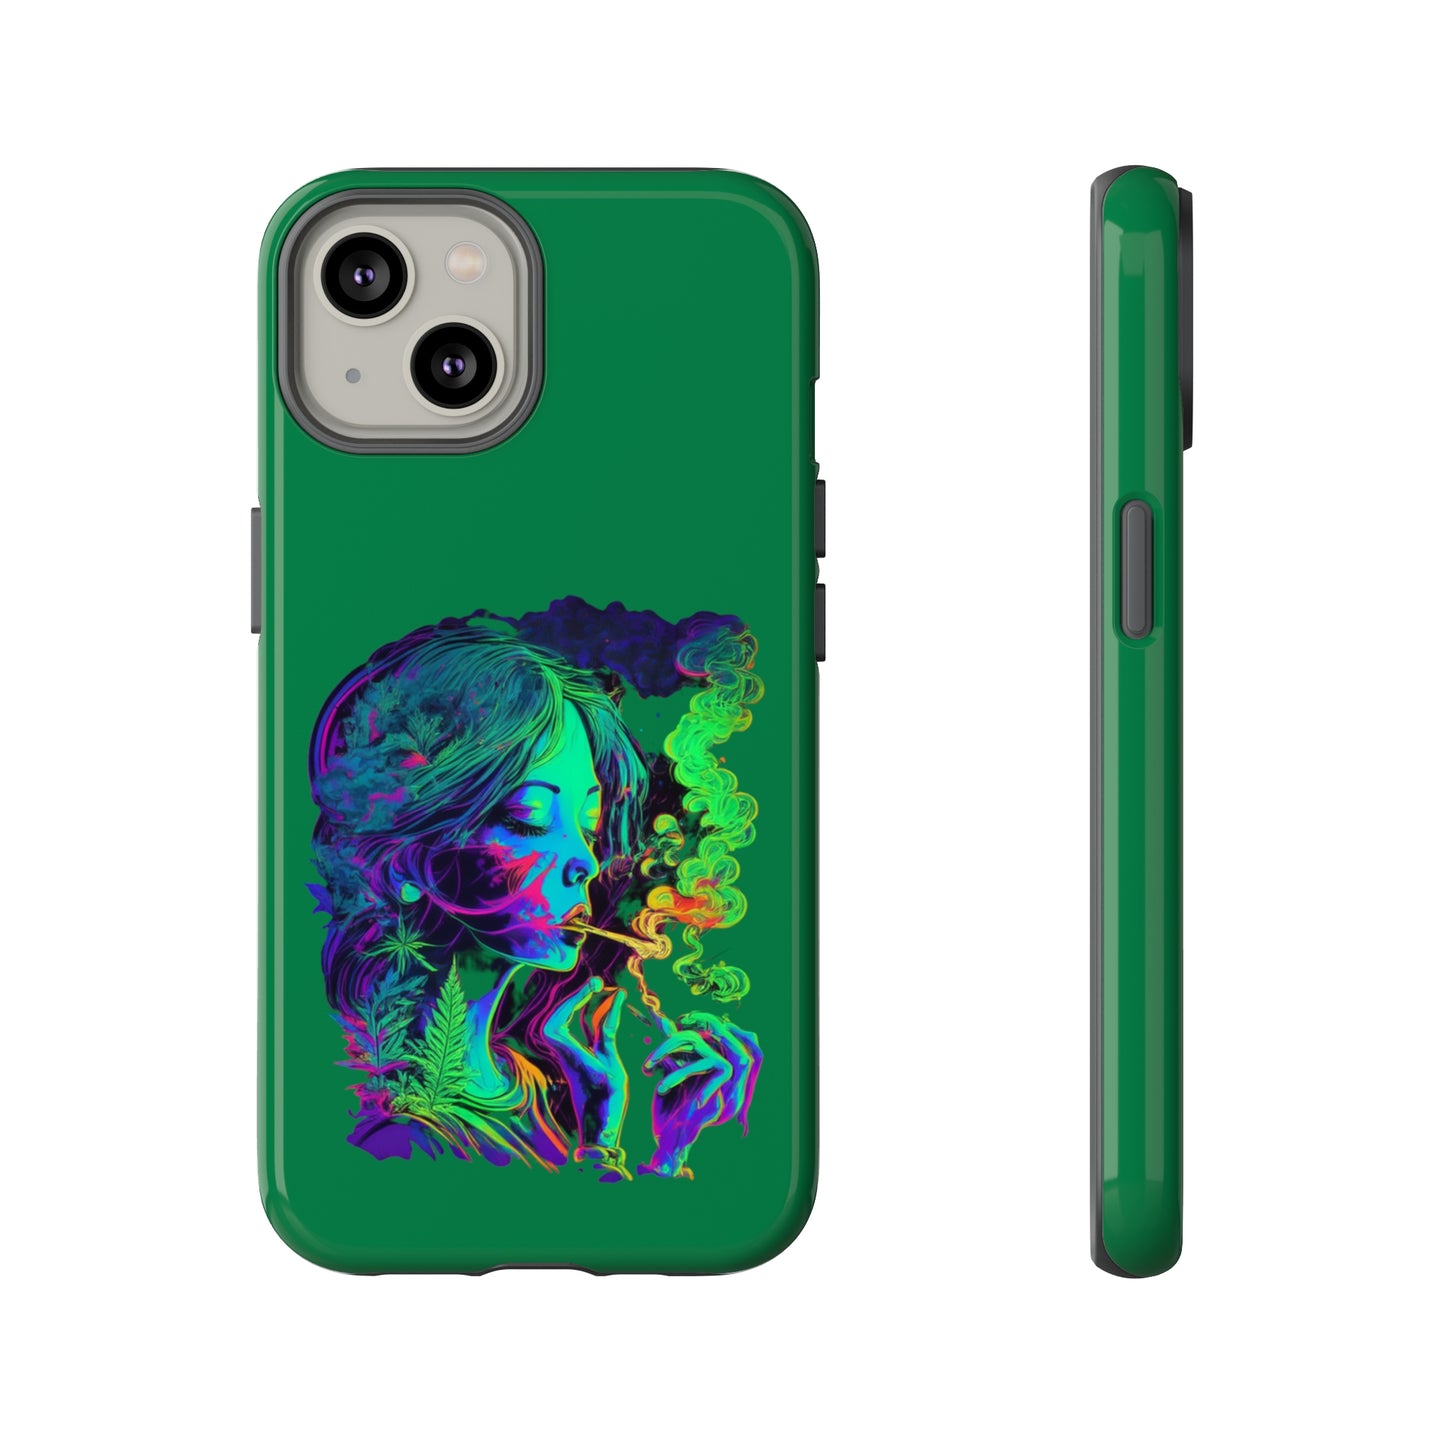 Grass-Fed - Green - iPhone / Pixel / Galaxy